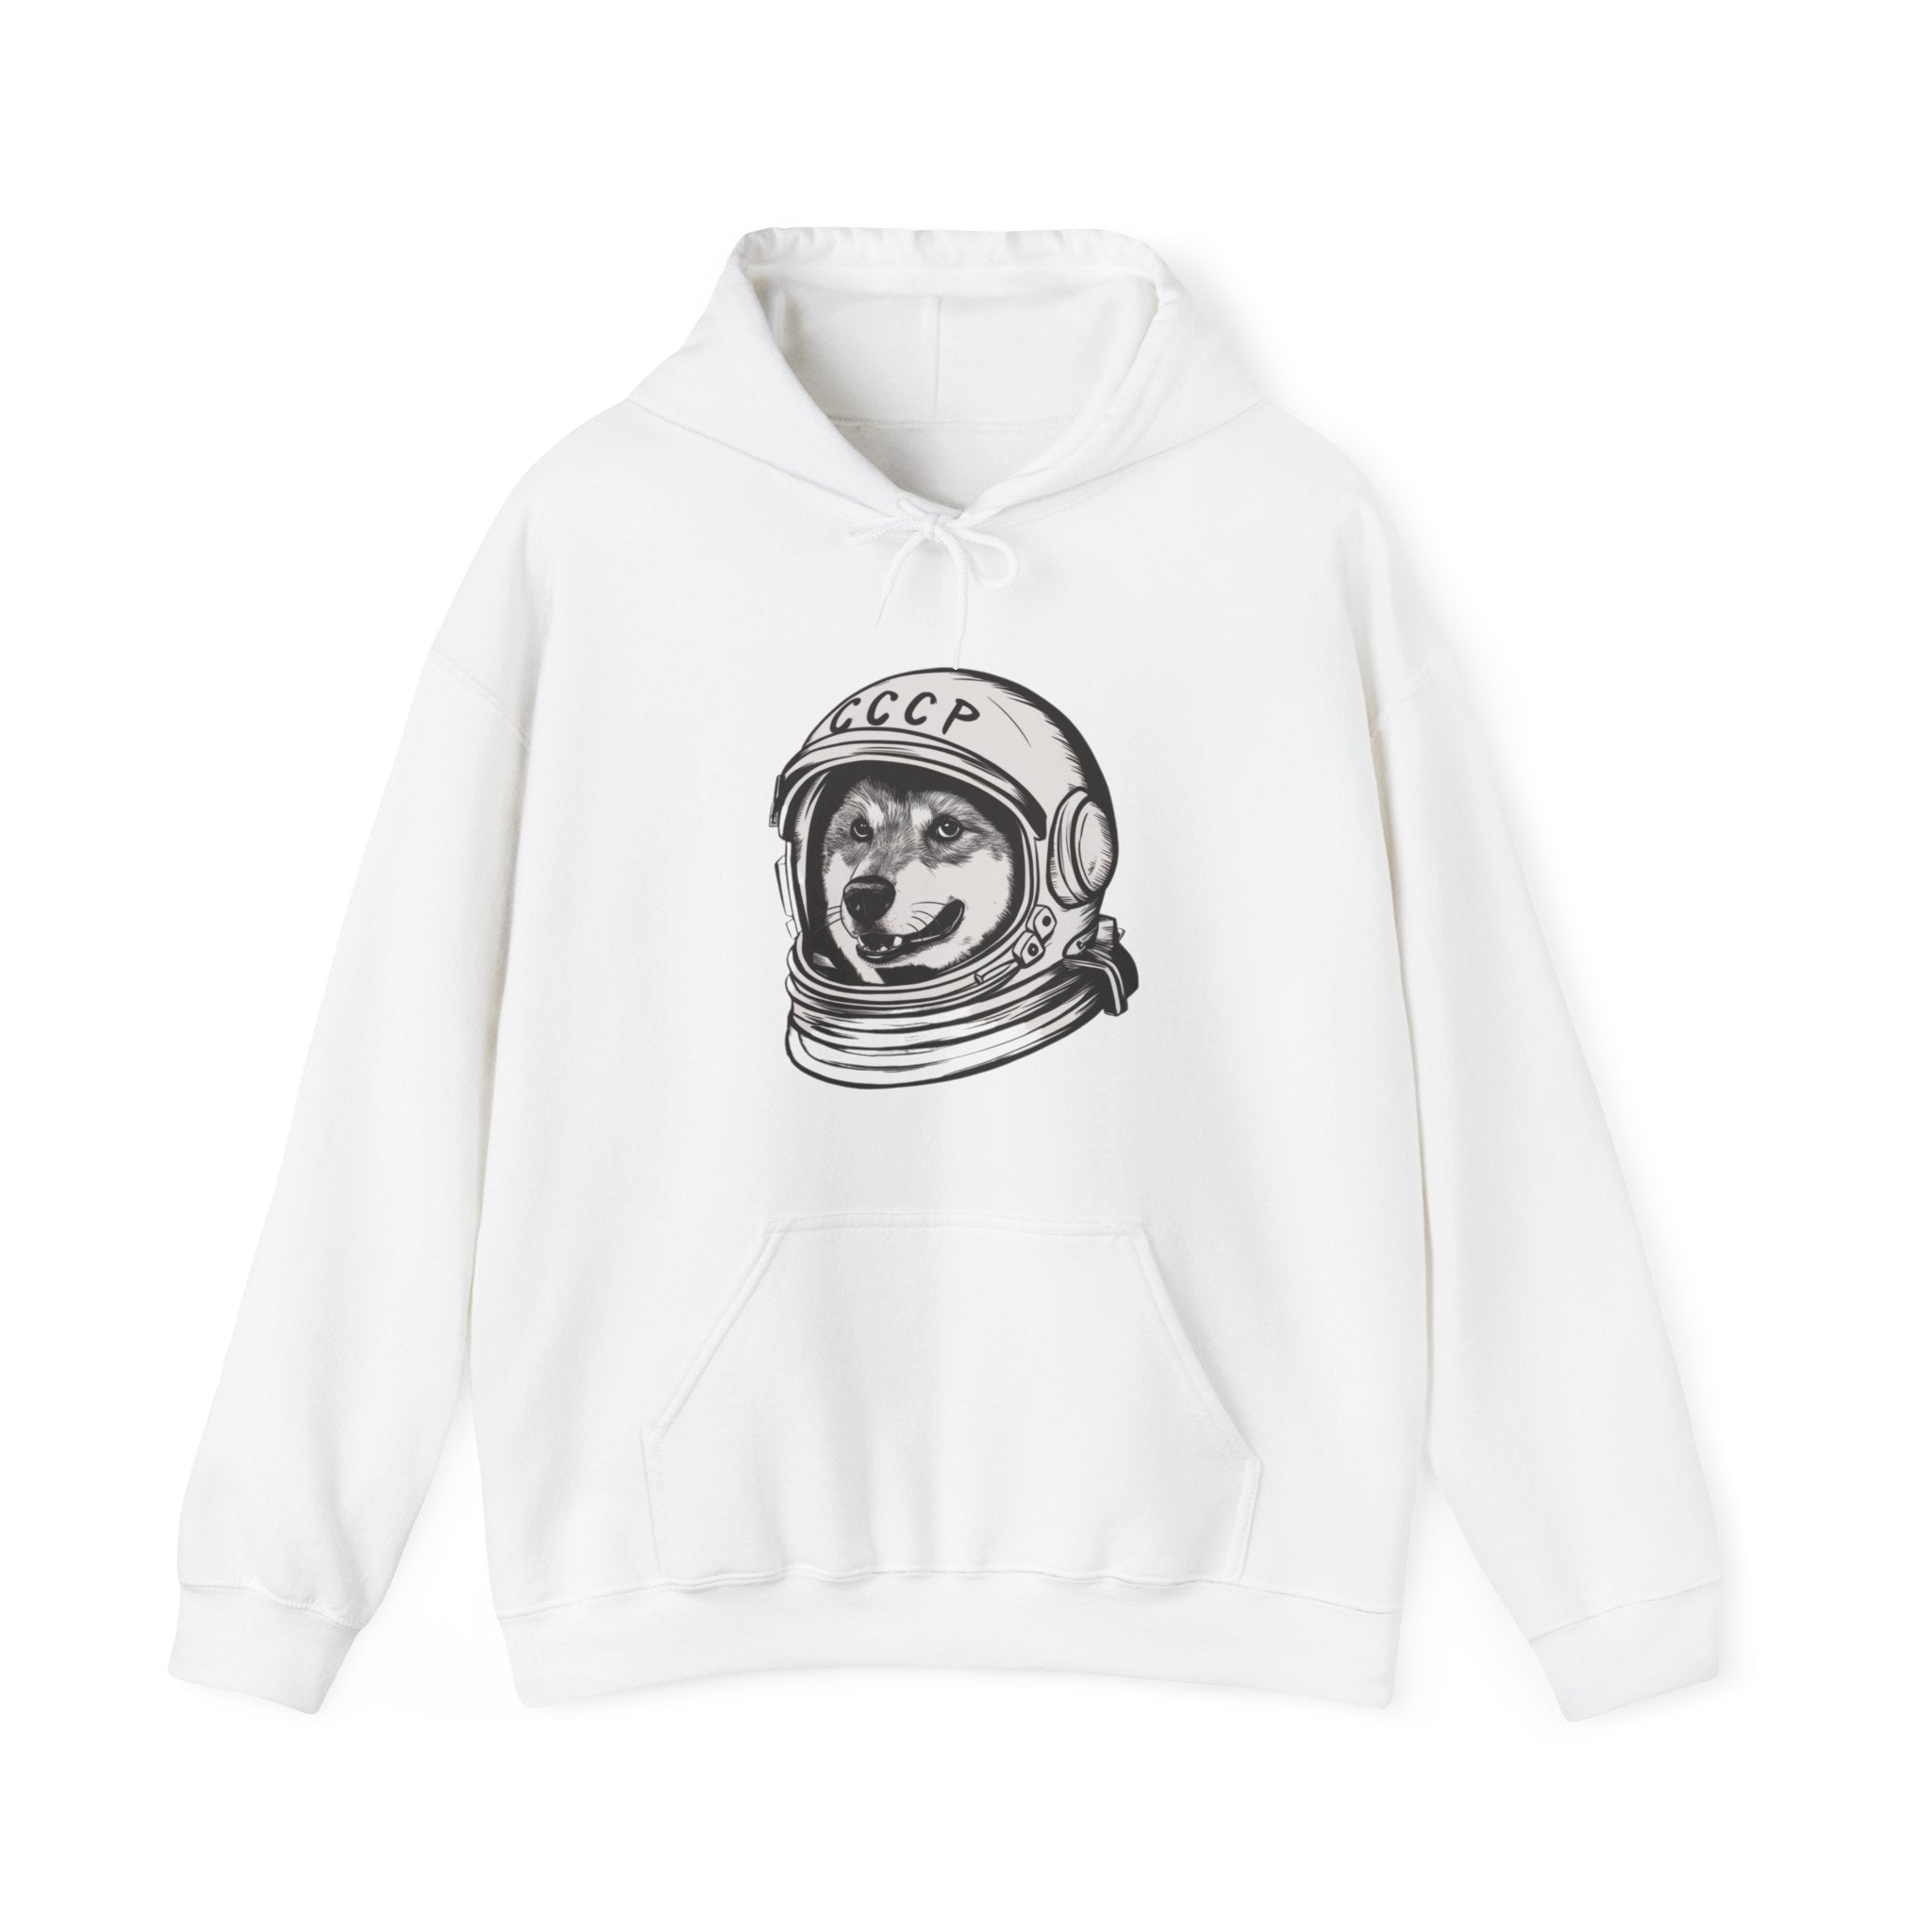 CCCP Astronaut Dog - Hooded Sweatshirt